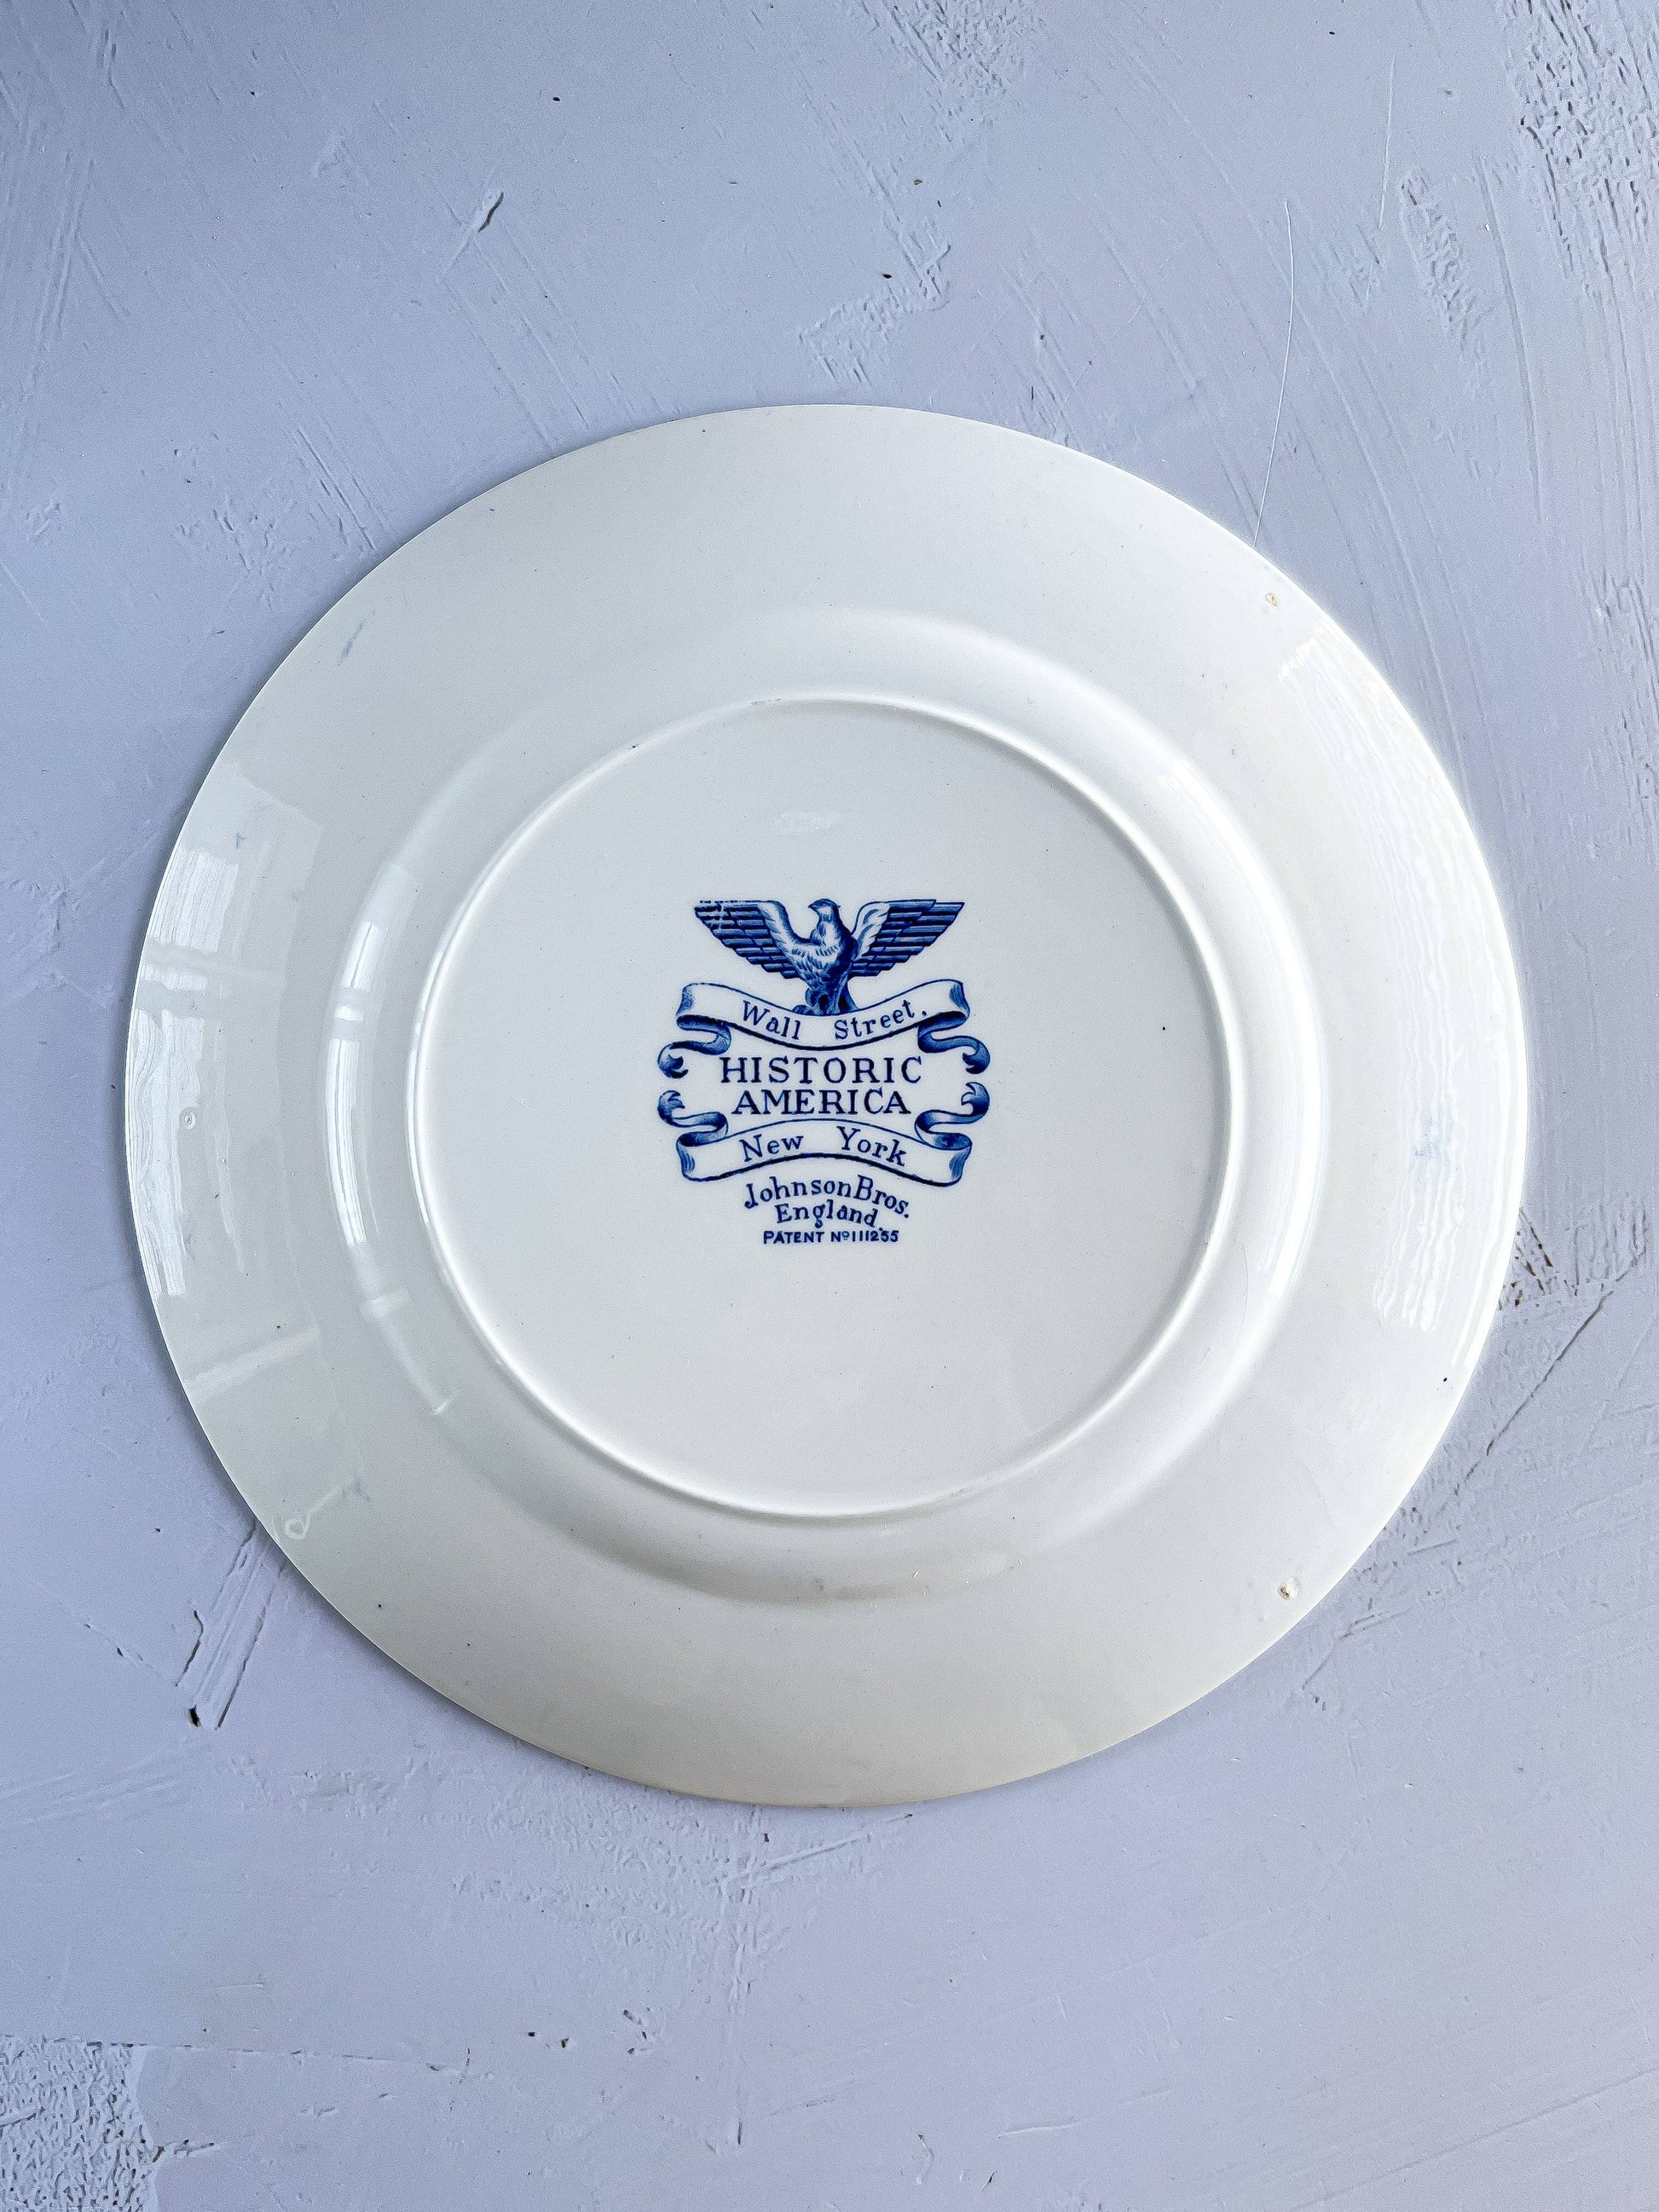 Johnson Bros Historical America Luncheon Plate - ‘Wall Street’ Design - SOSC Home